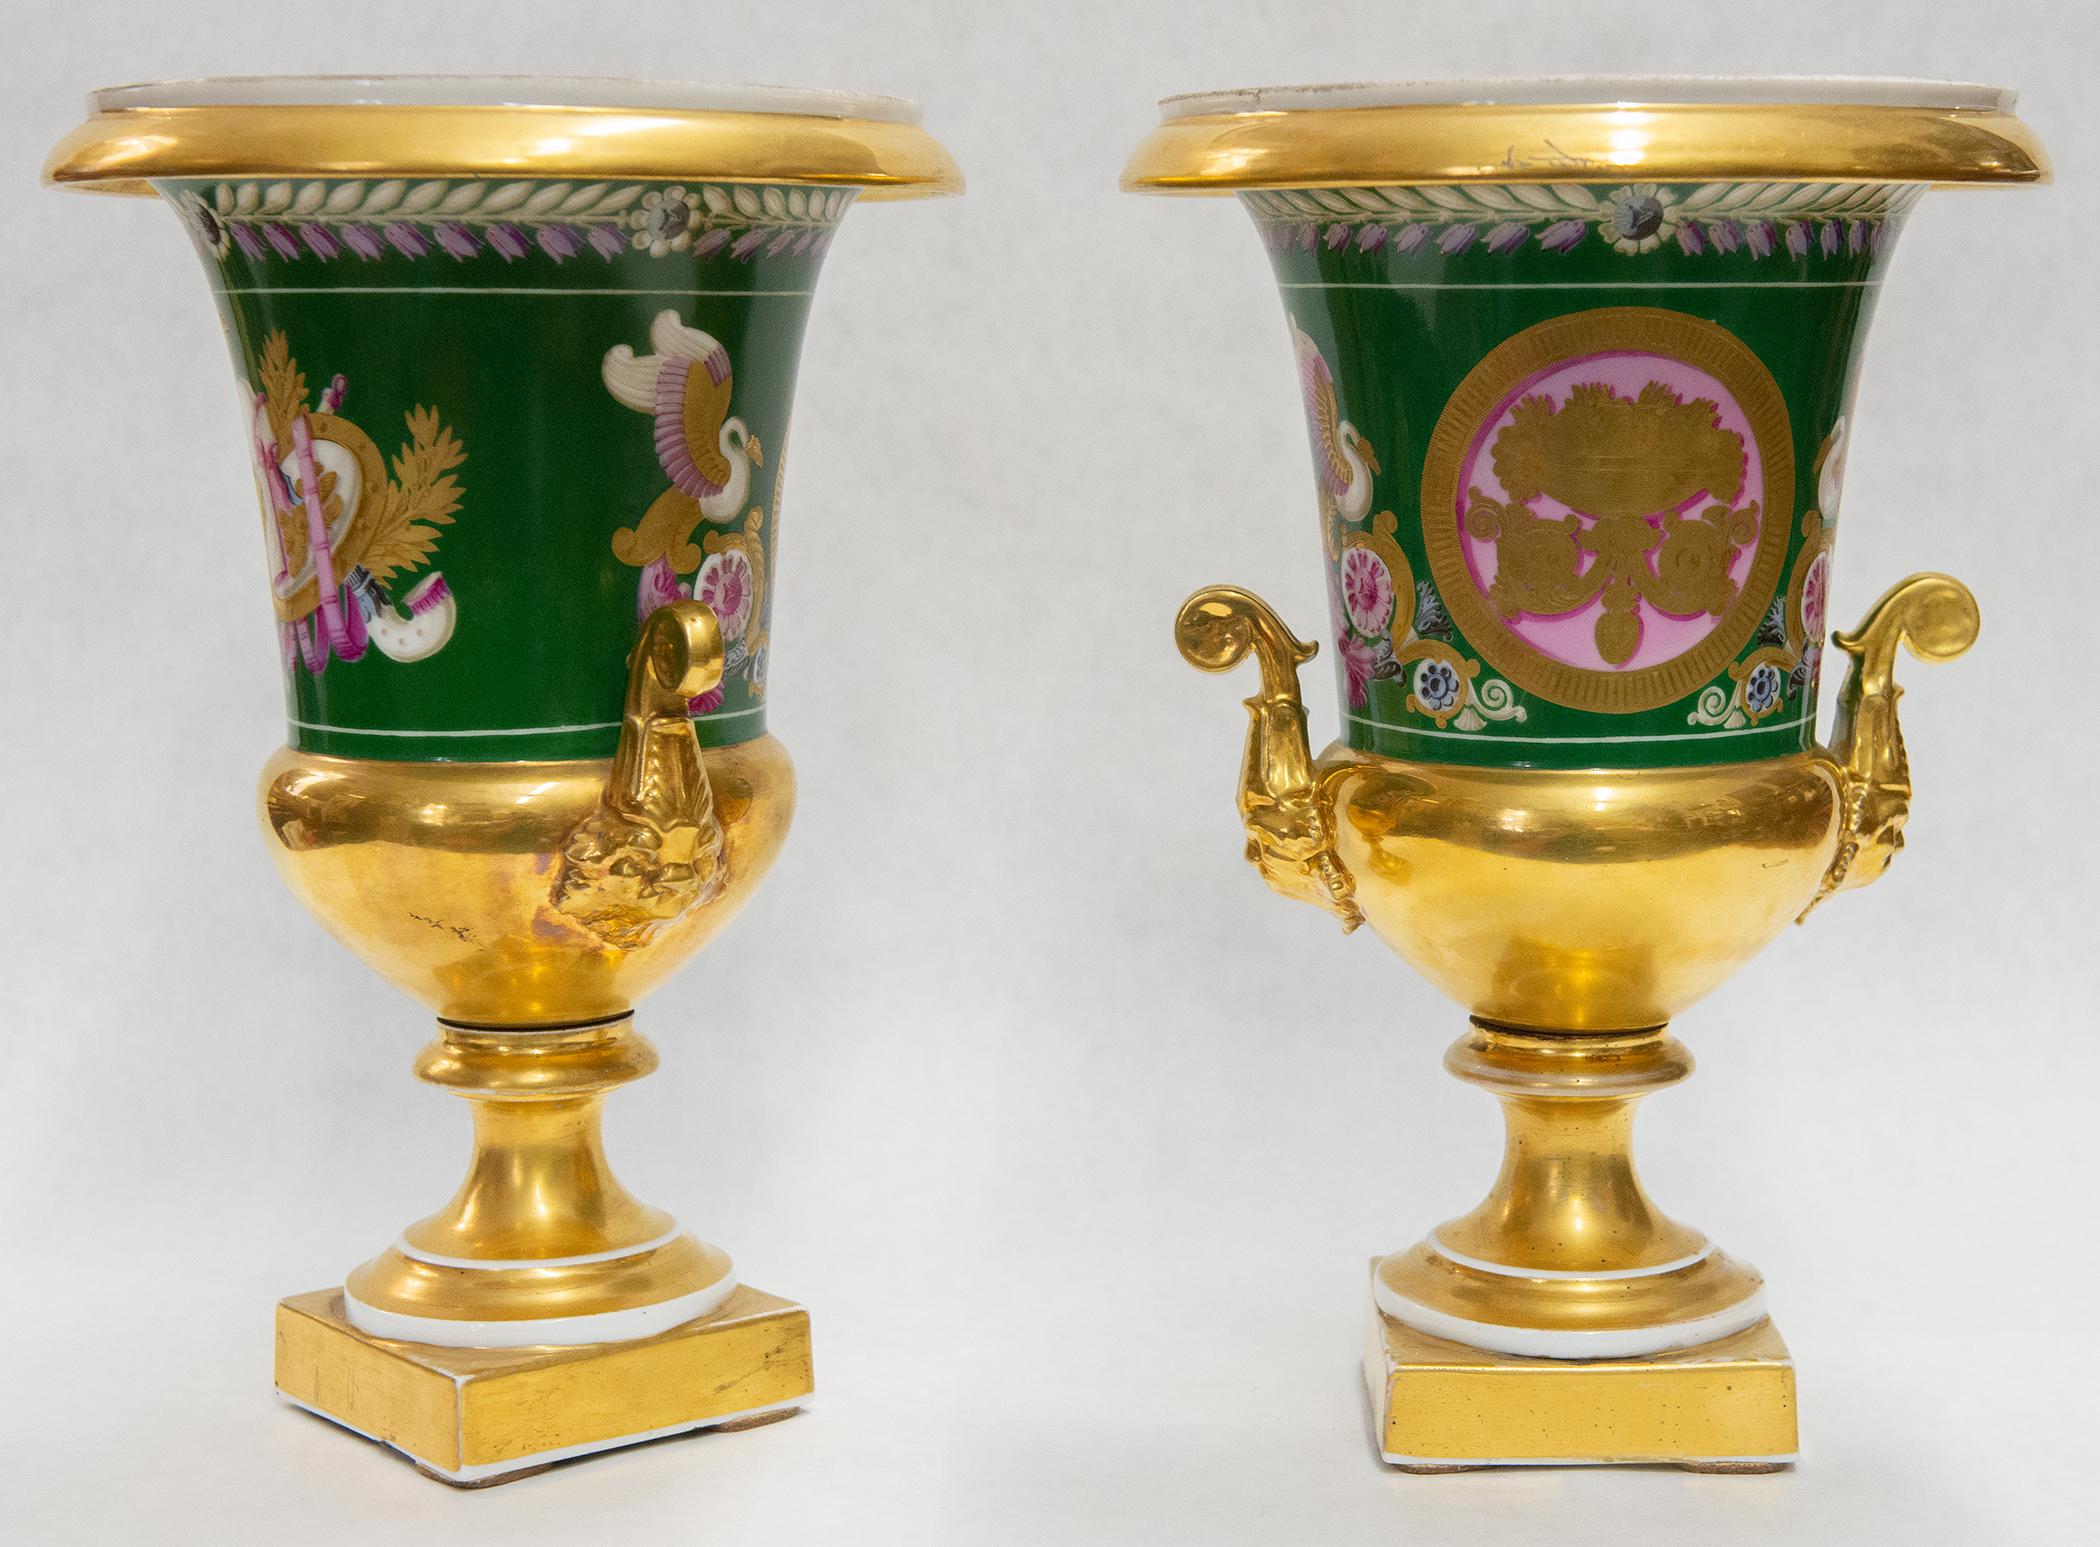 Rare Pair of Antique French Golden Porcelain Sèvres Vases  For Sale 1